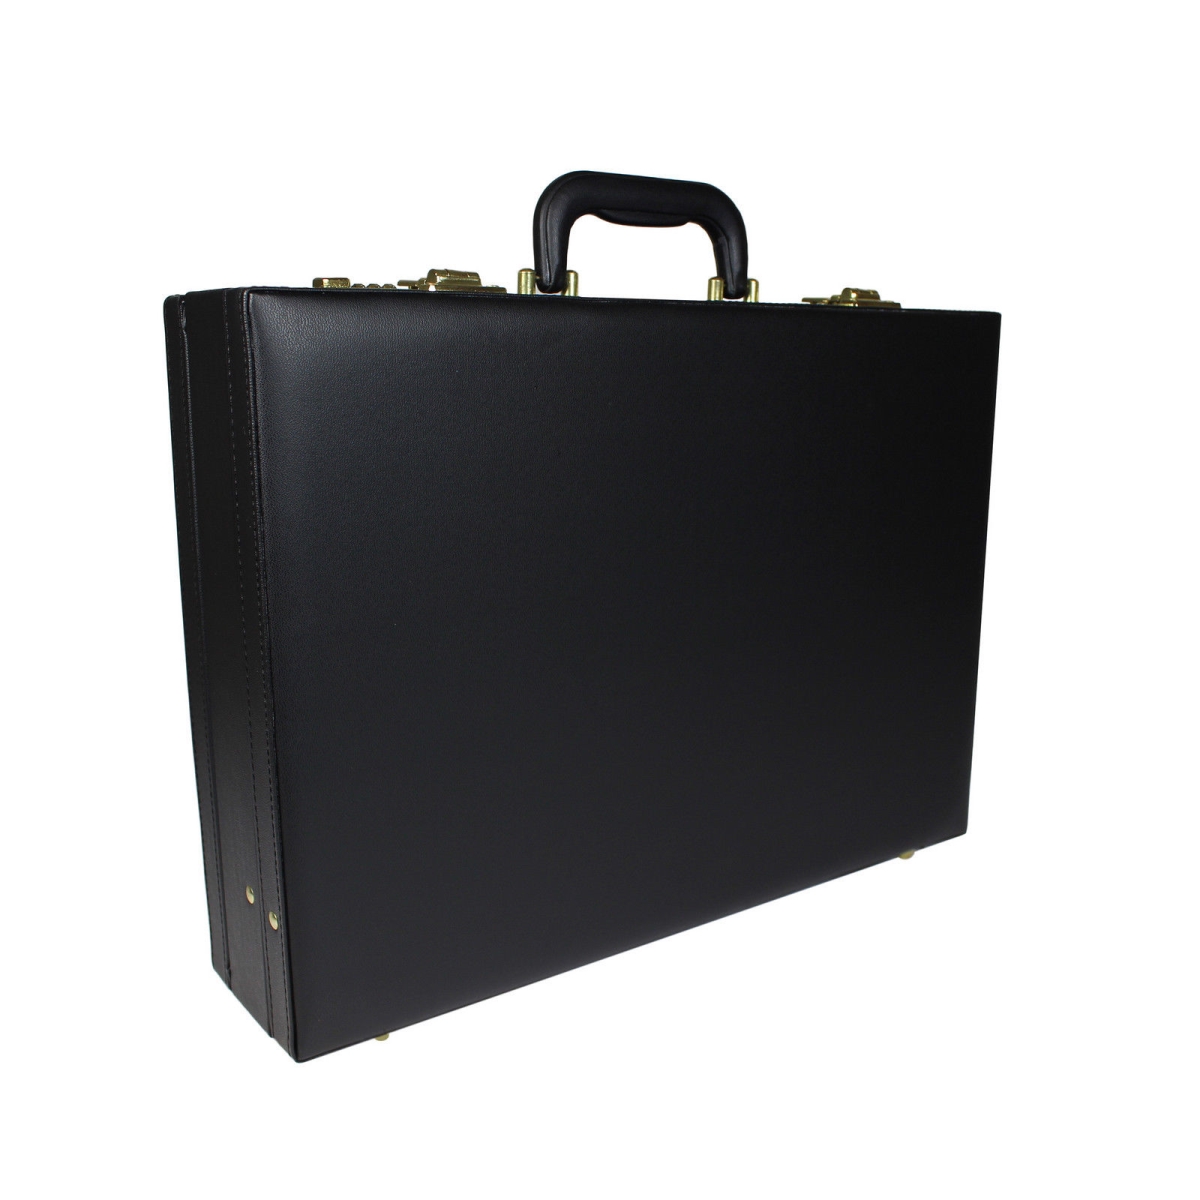 Wt-bc-2019 London Executive Business Attache Briefcase